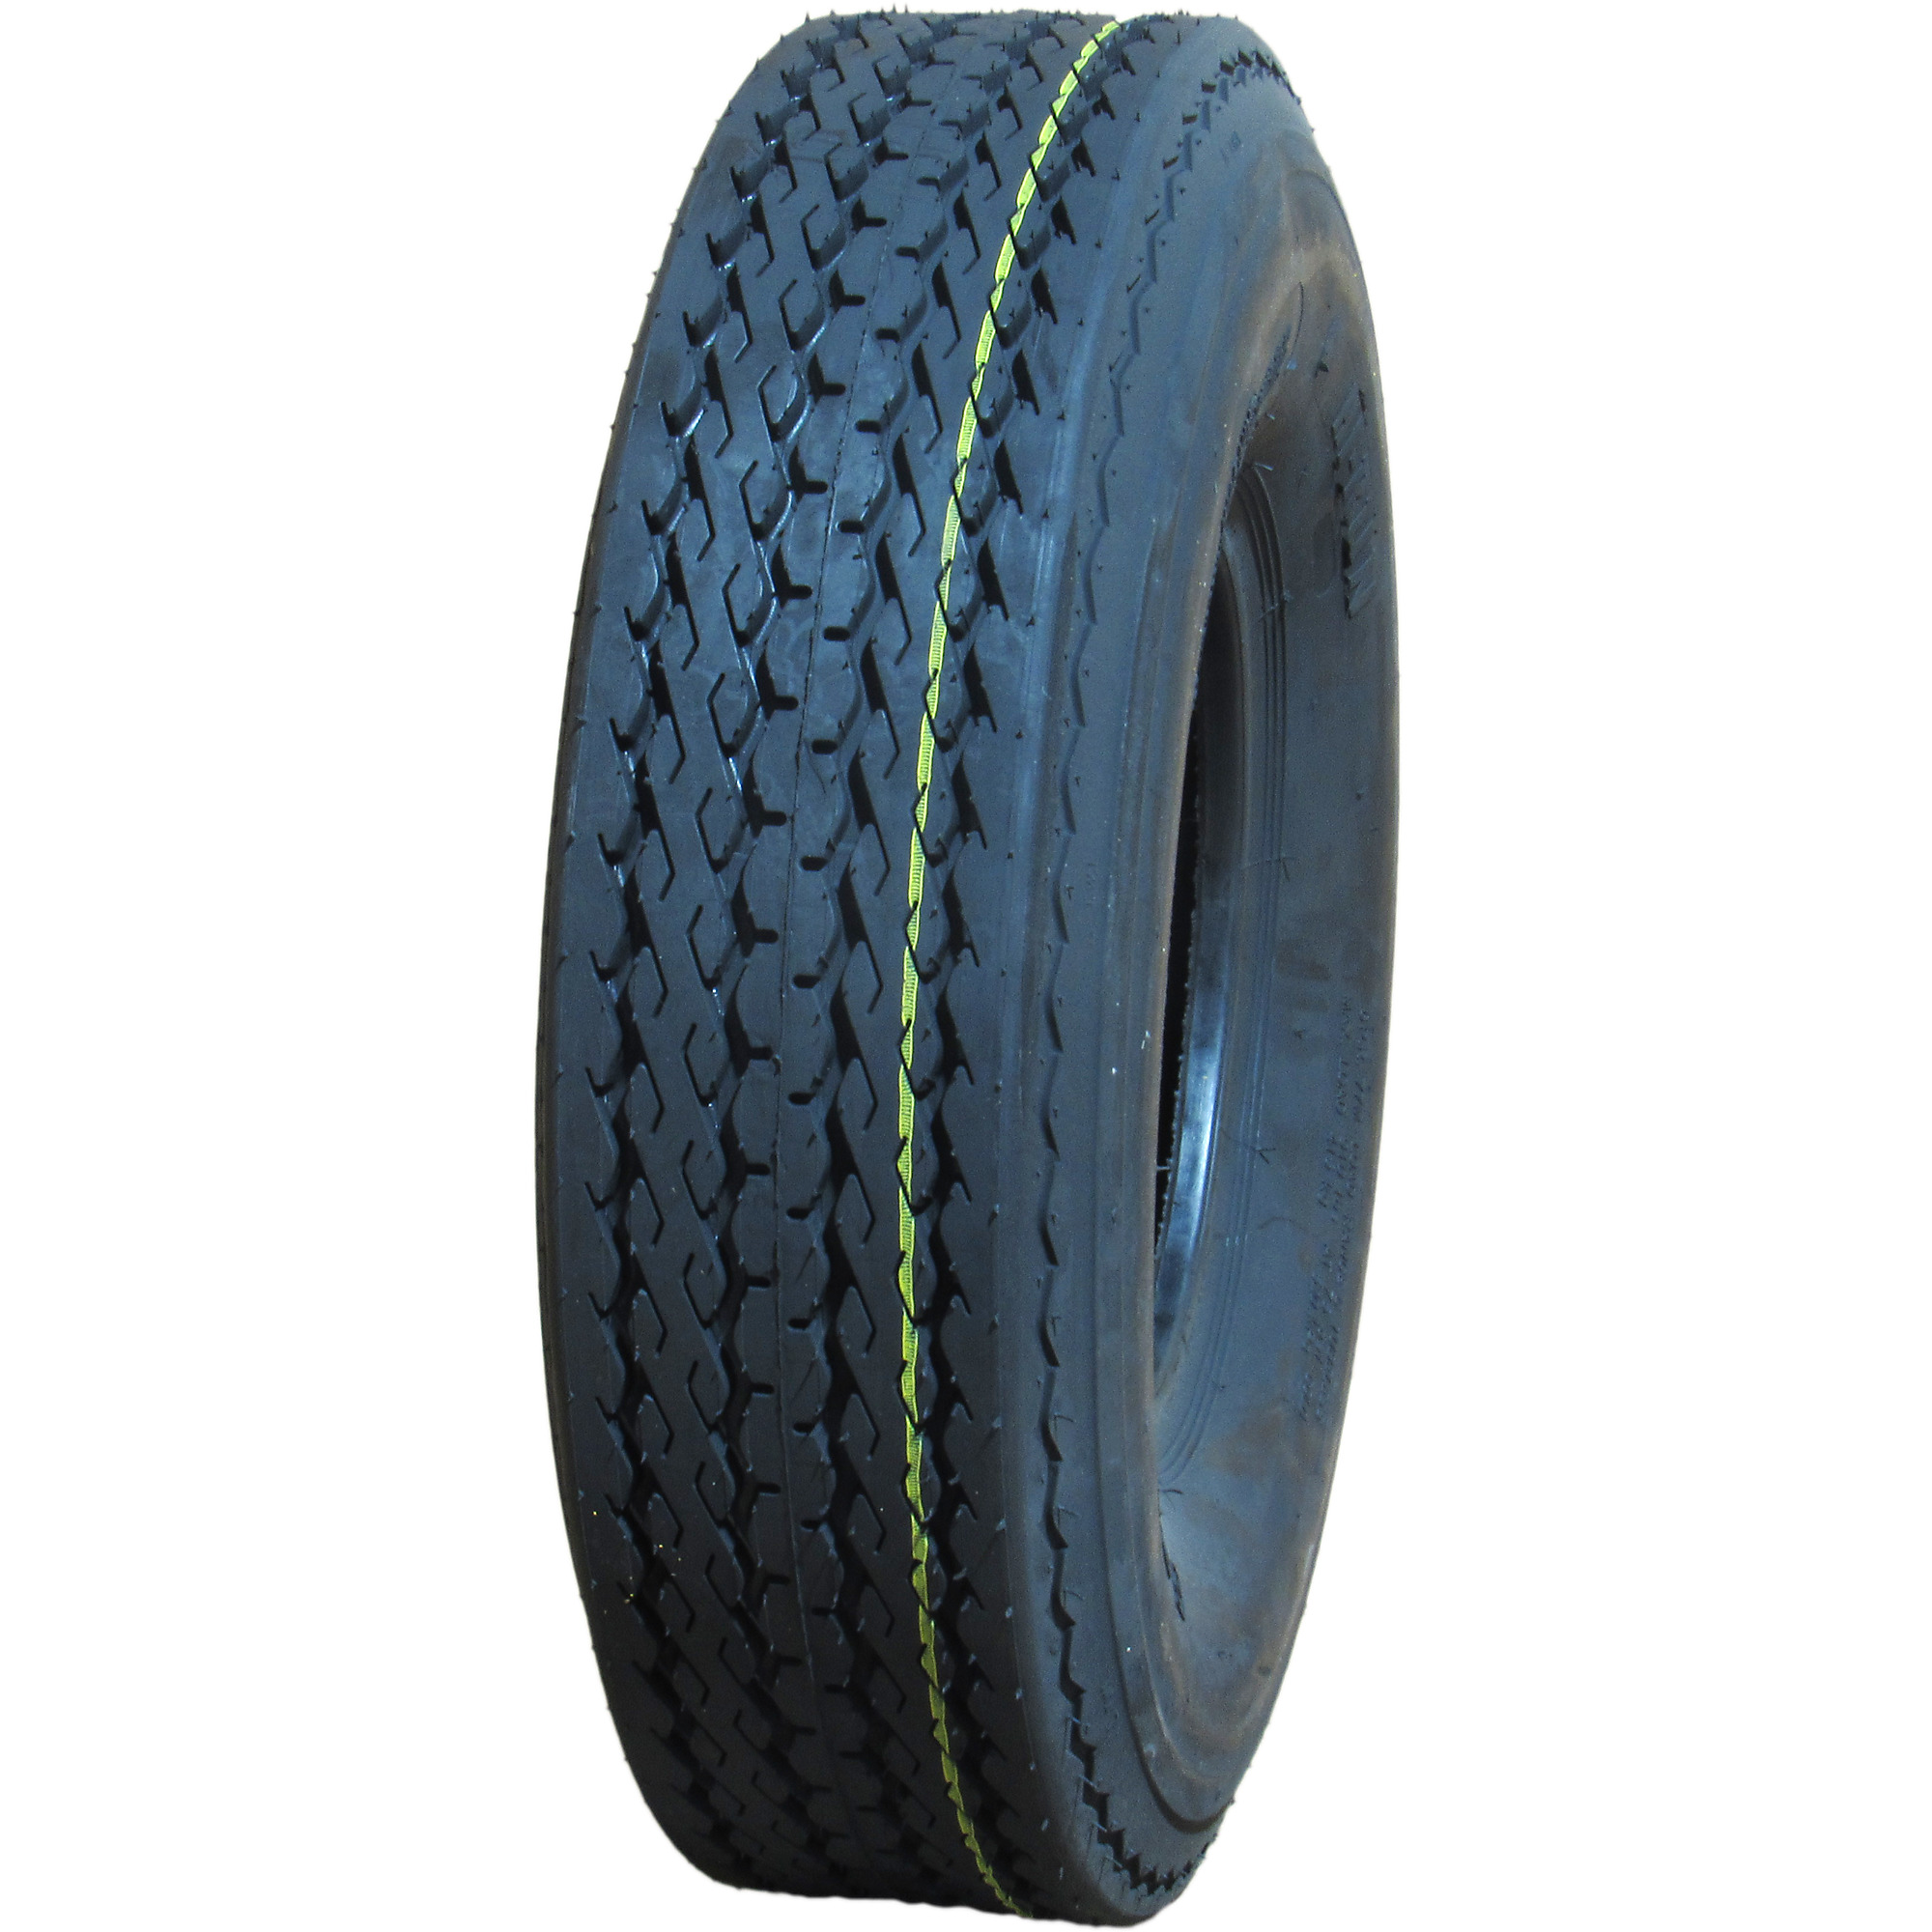 HI-RUN, Highway Trailer Tire, Bias-ply, Tire Size 5.70-8 Load Range Rating C, Model WD1009